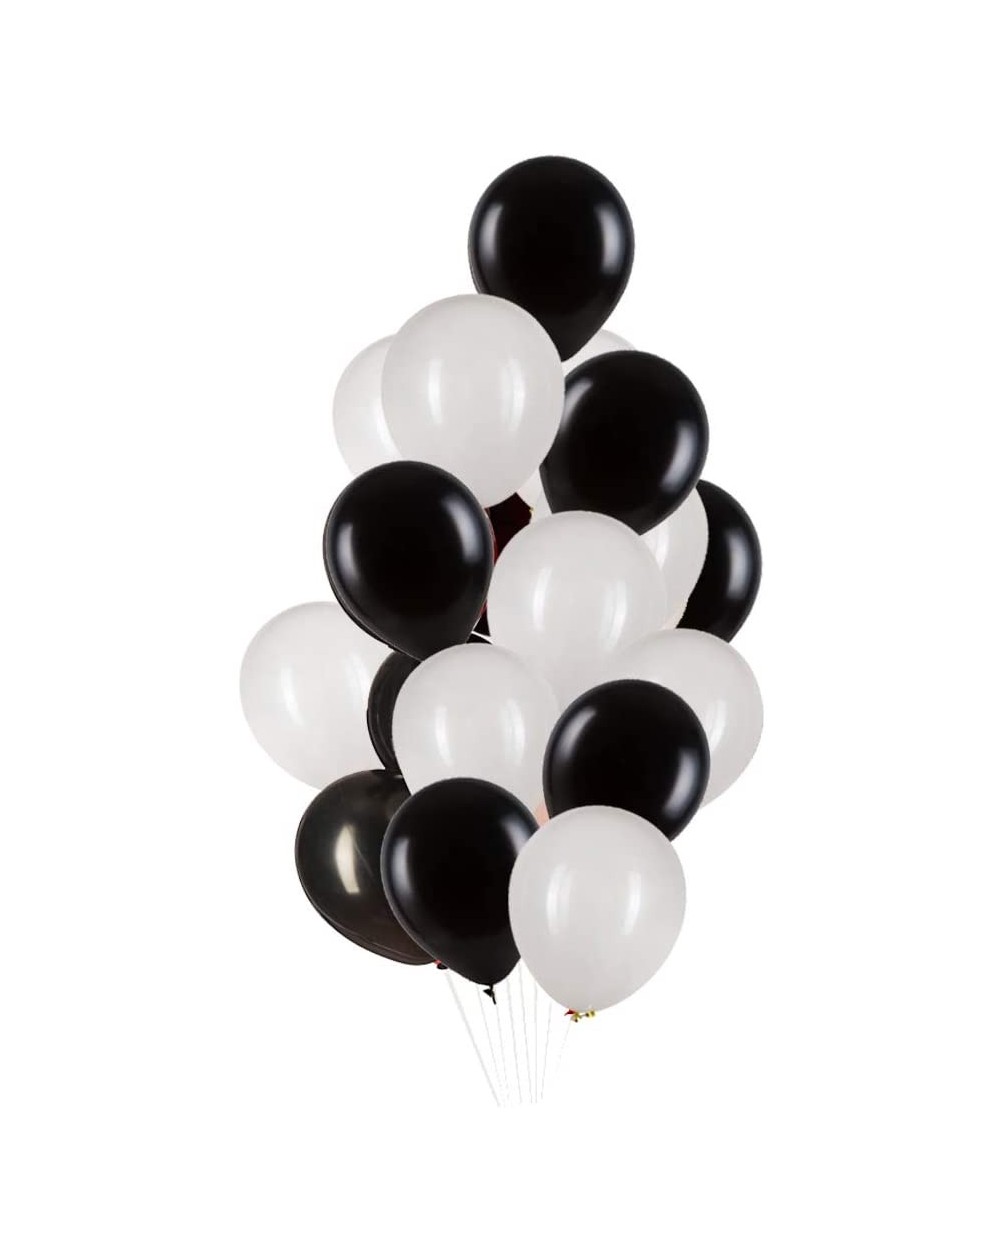 Balloons Black and White Balloon Latex Helium Ballon 10 inch for Birthday Wedding Graduation Halloween Panda Racing Car Theme...